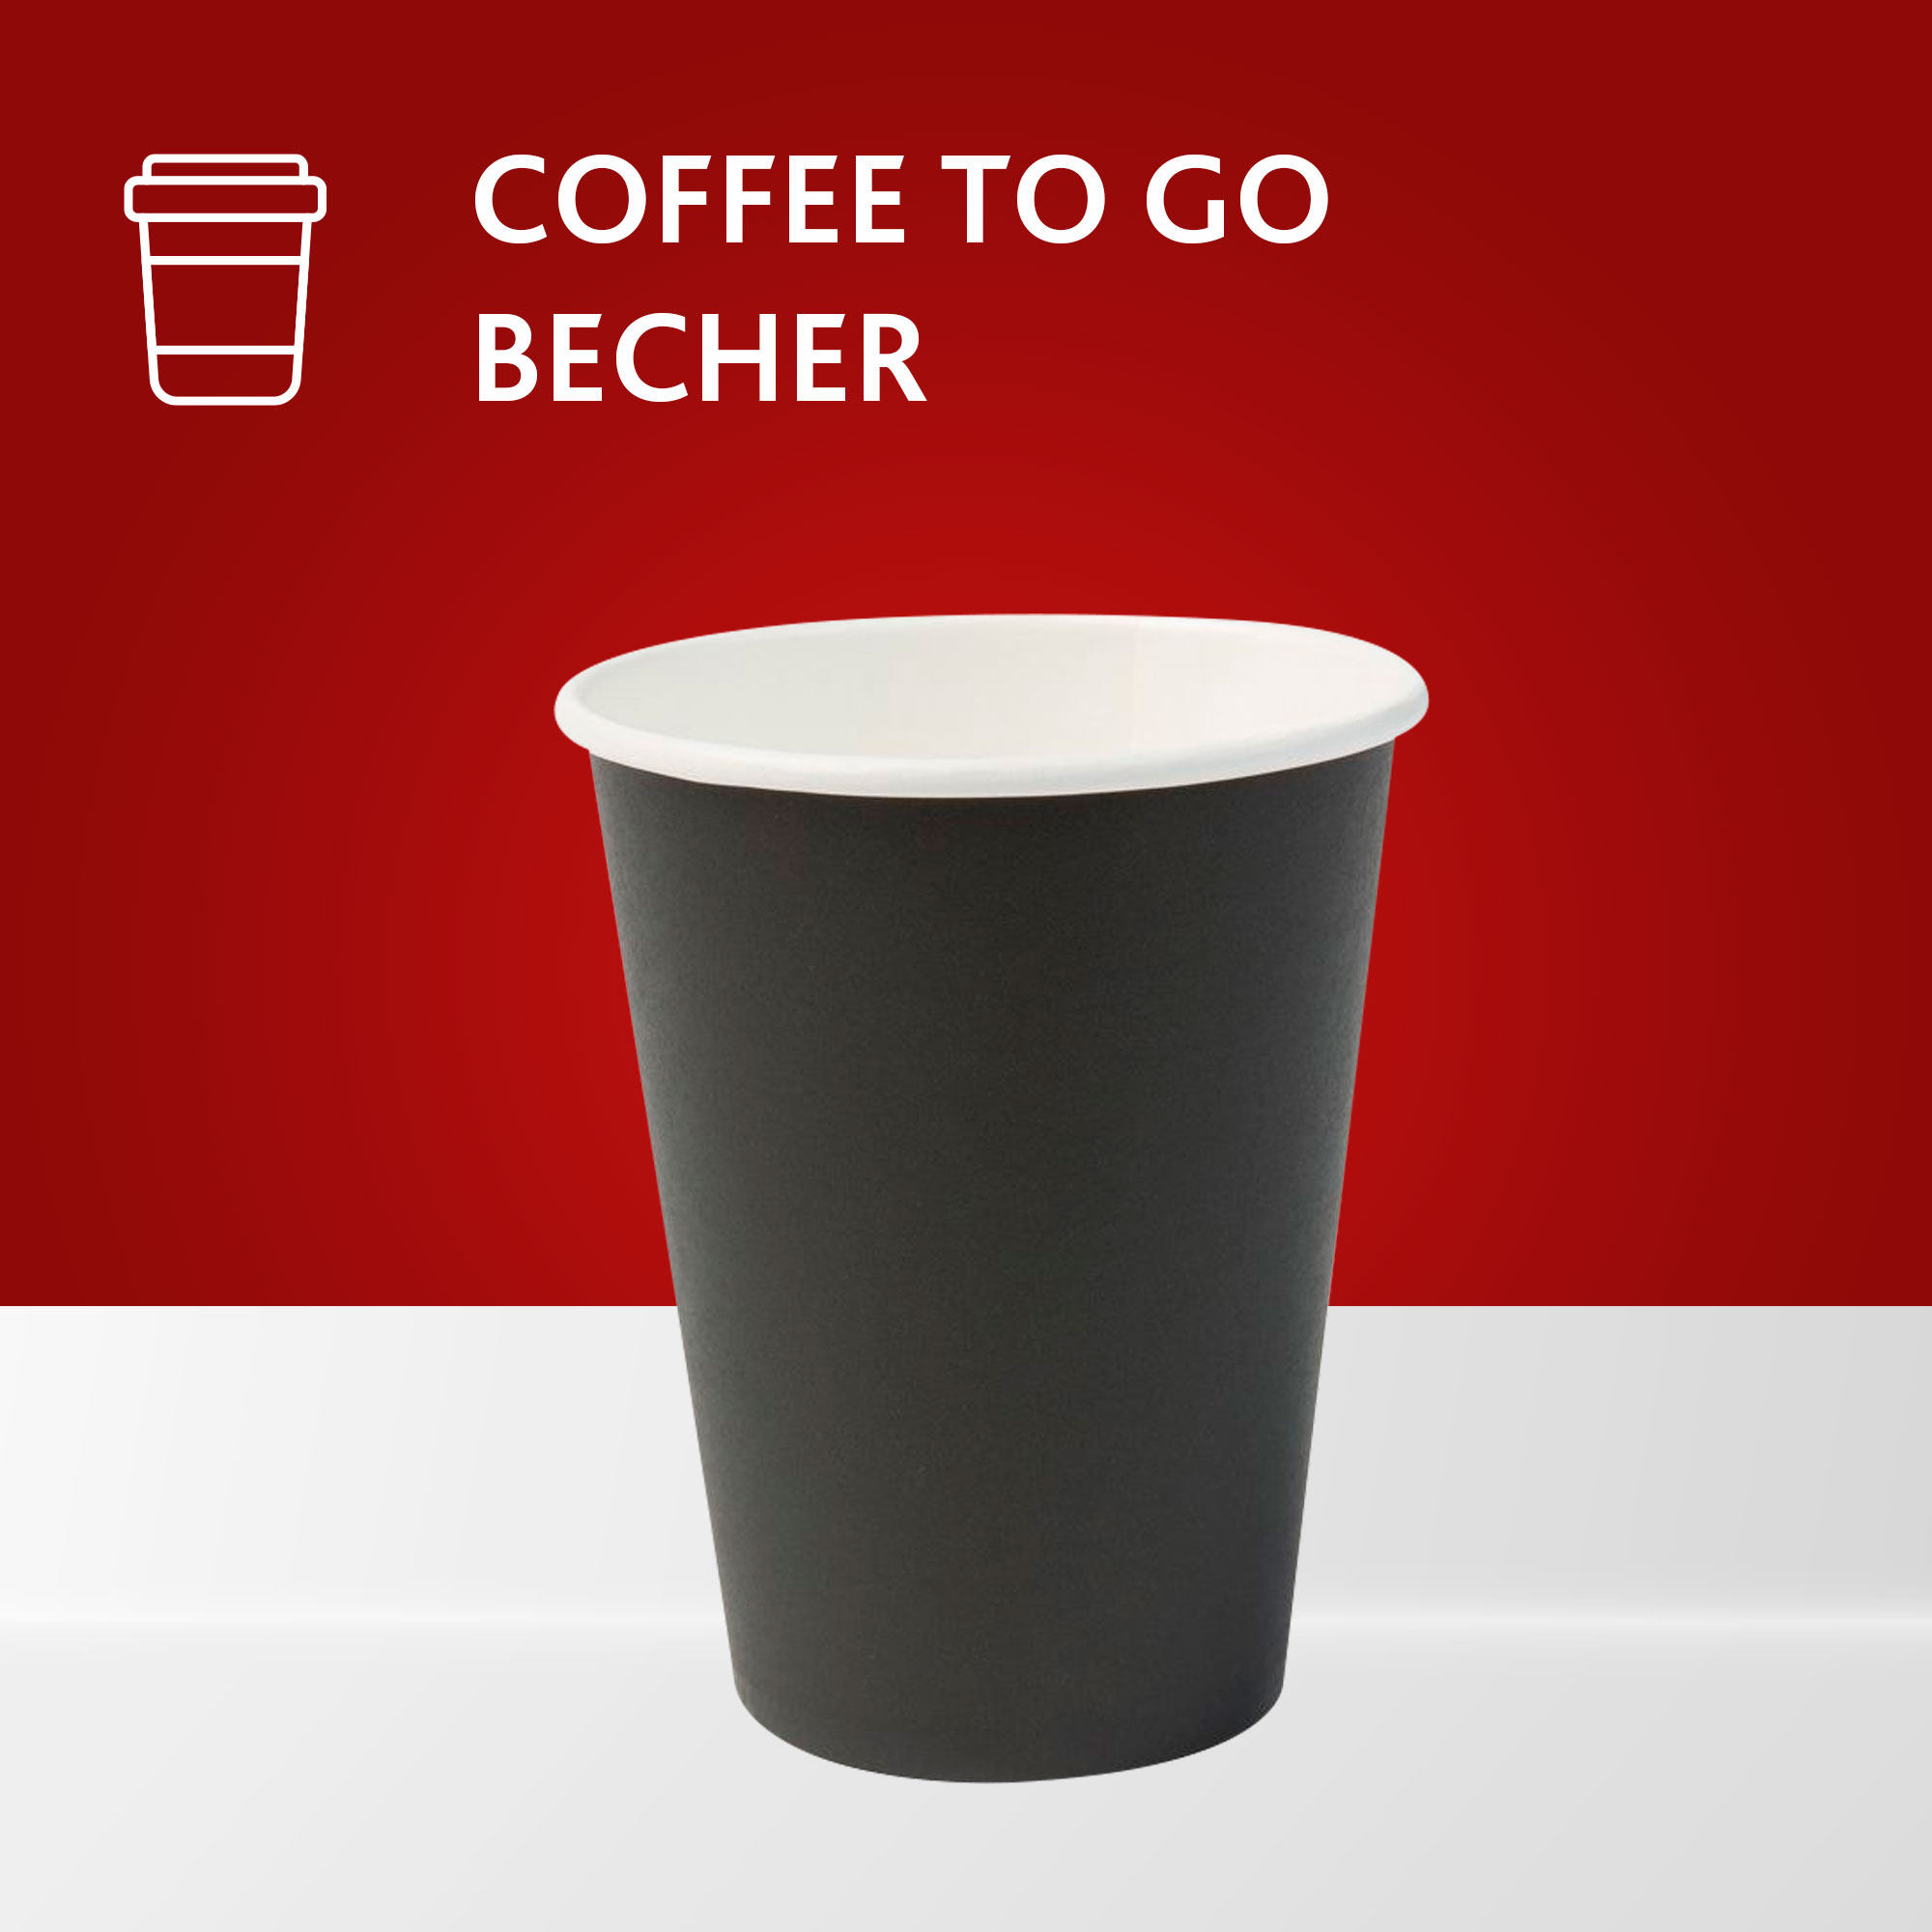 Coffee to go Becher Momlife  Kaffee zum mitnehmen, To go becher, Coffee  to go becher